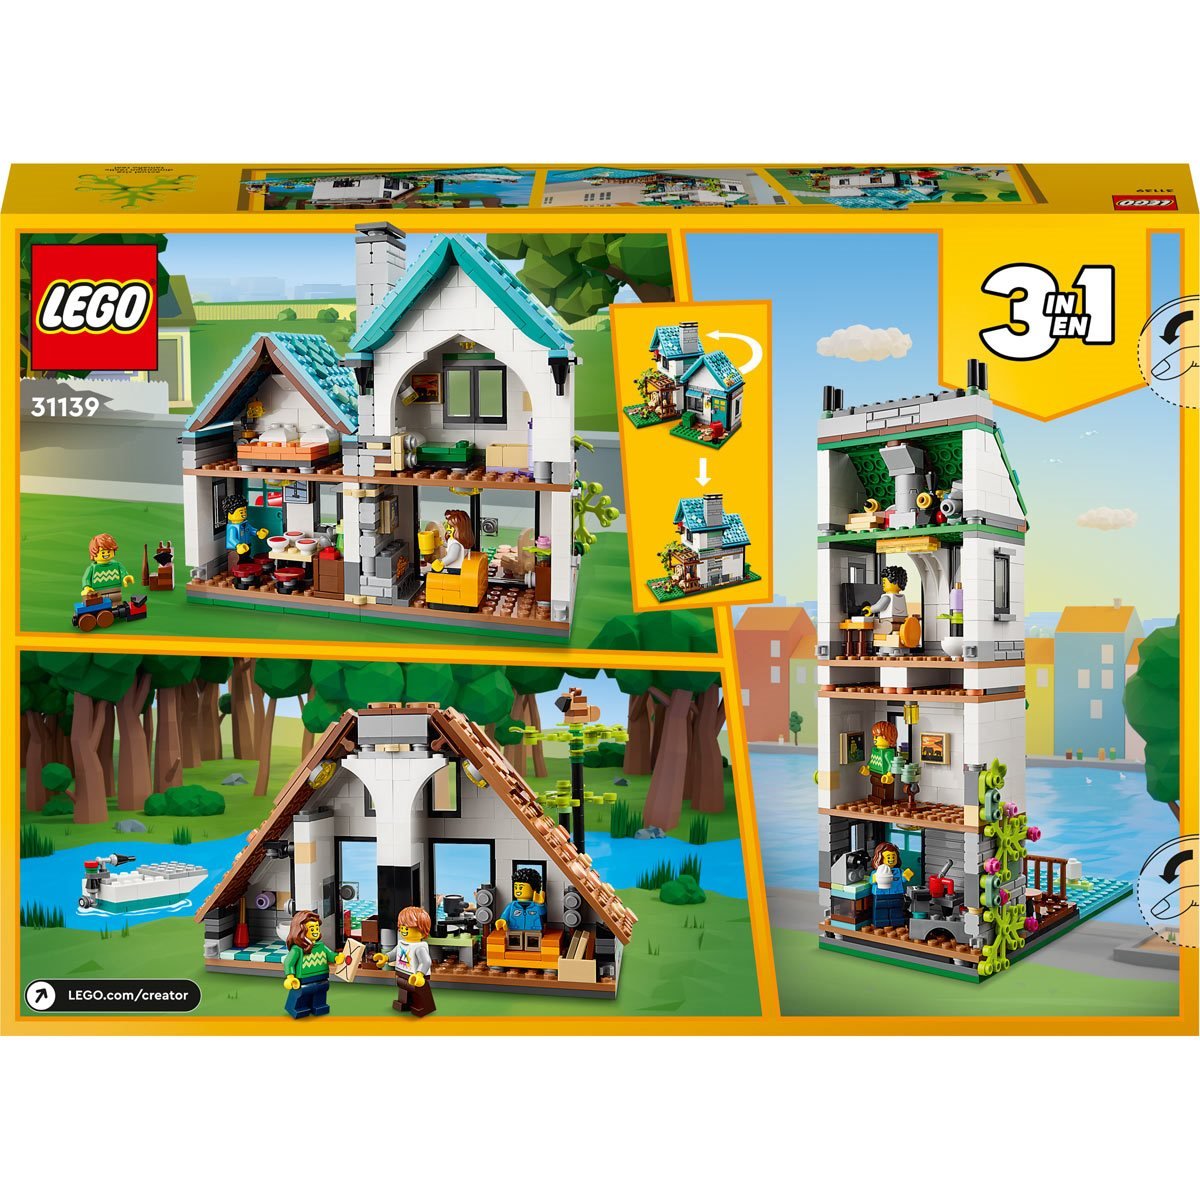 Klusjesman Christchurch sensatie LEGO 31139 Creator 3-in-1 Cozy House - Entertainment Earth